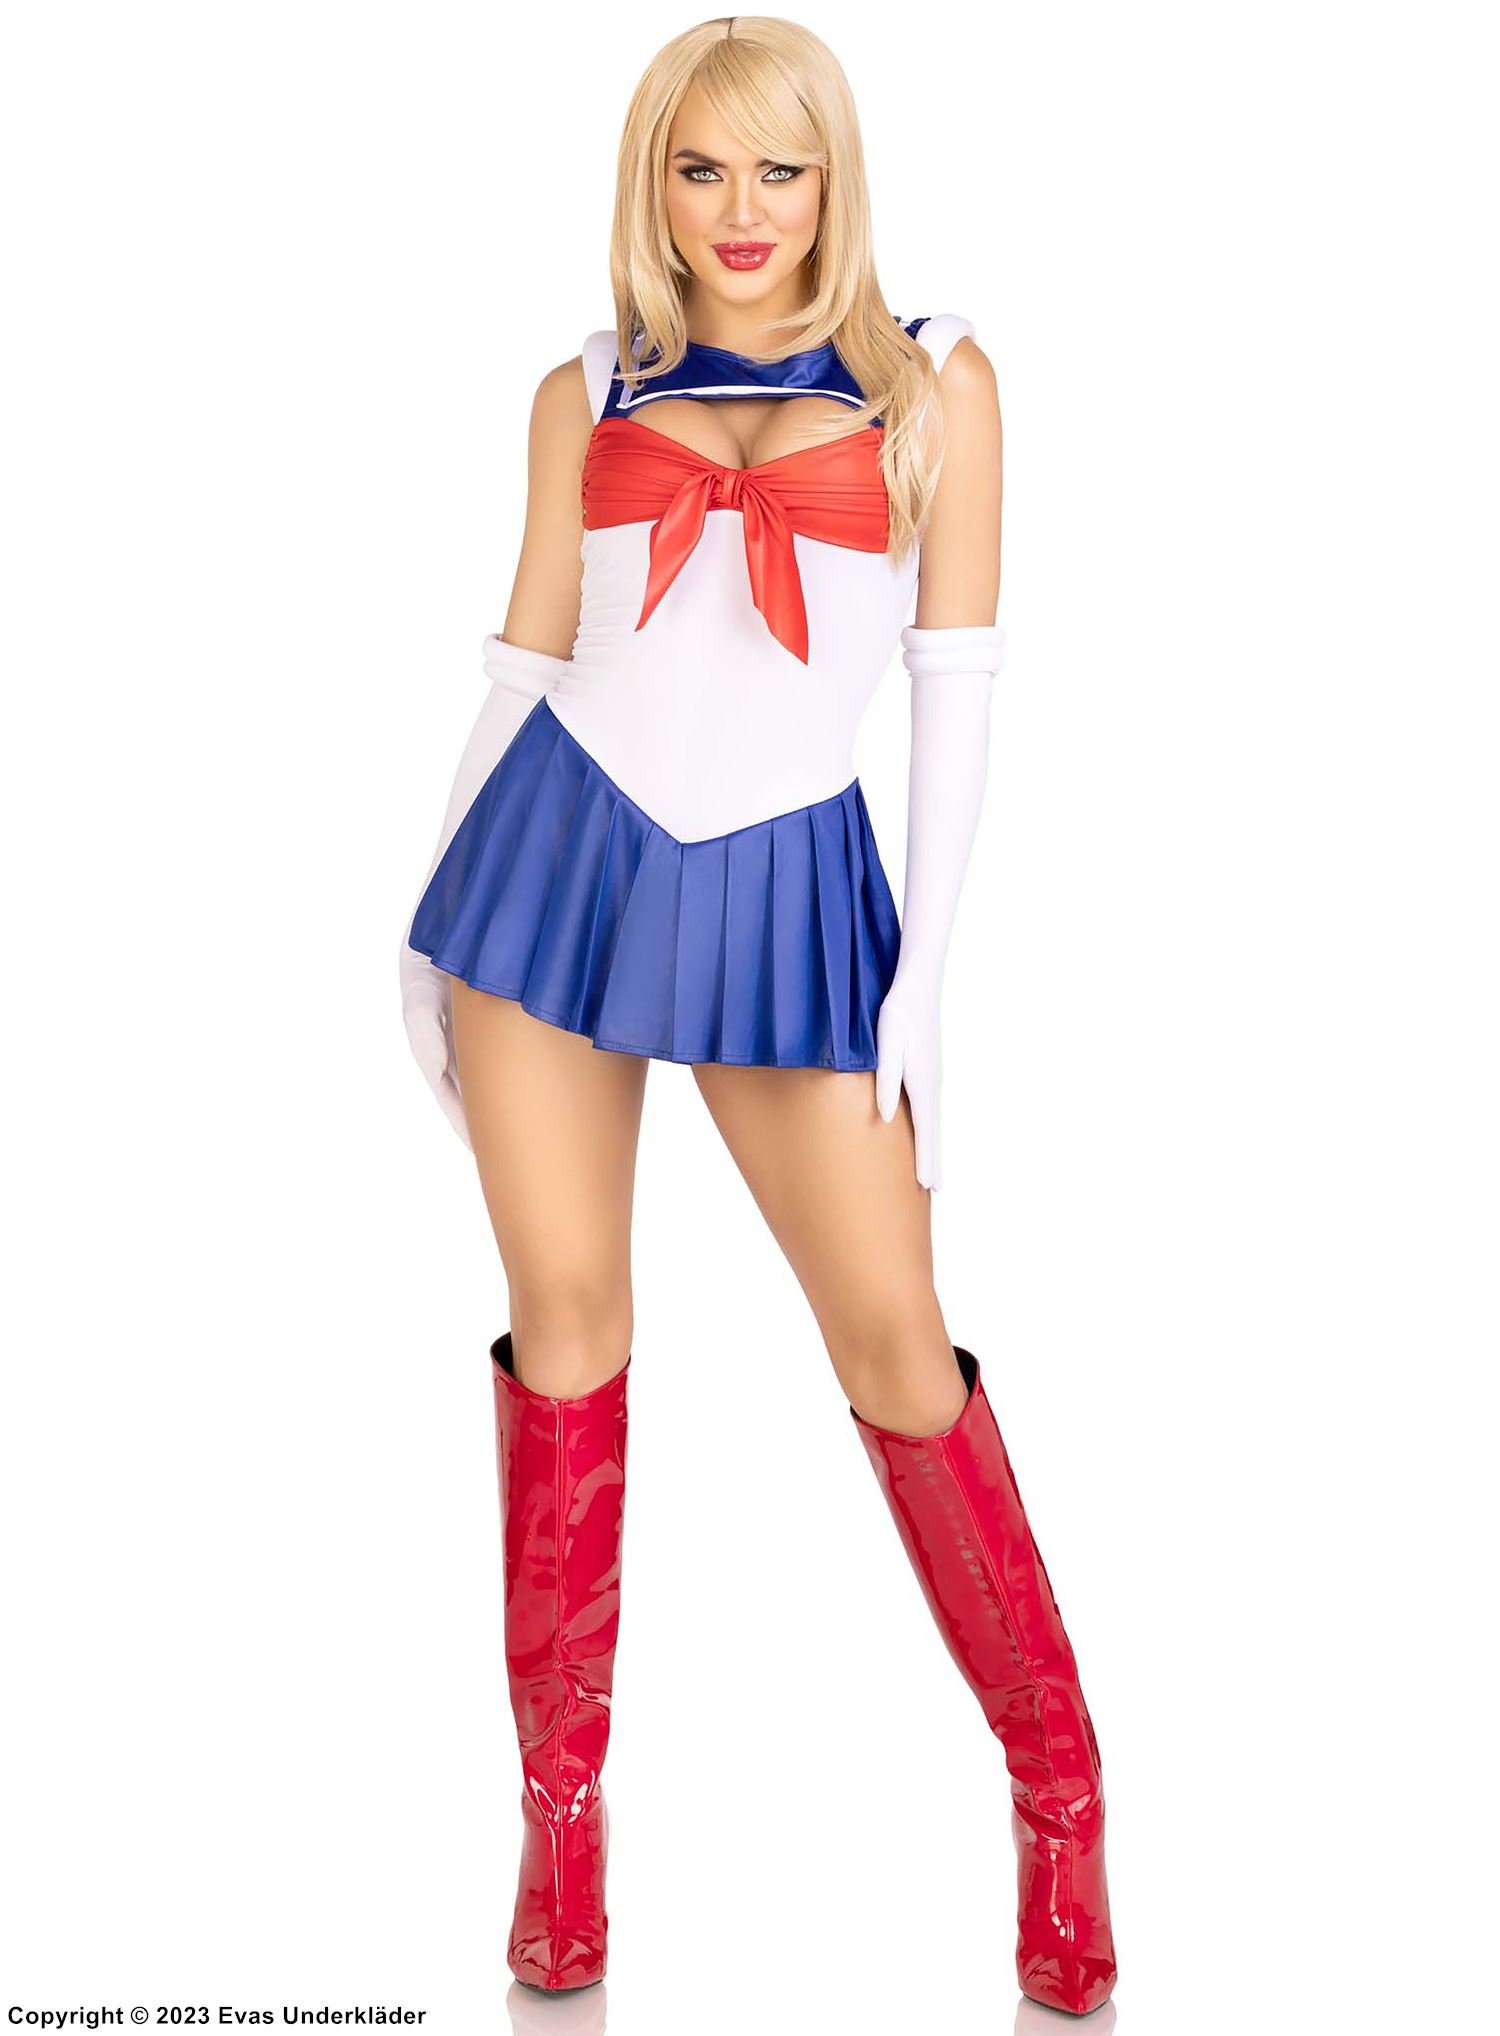 Sailor Moon, costume dress, big bow, pleats, keyhole